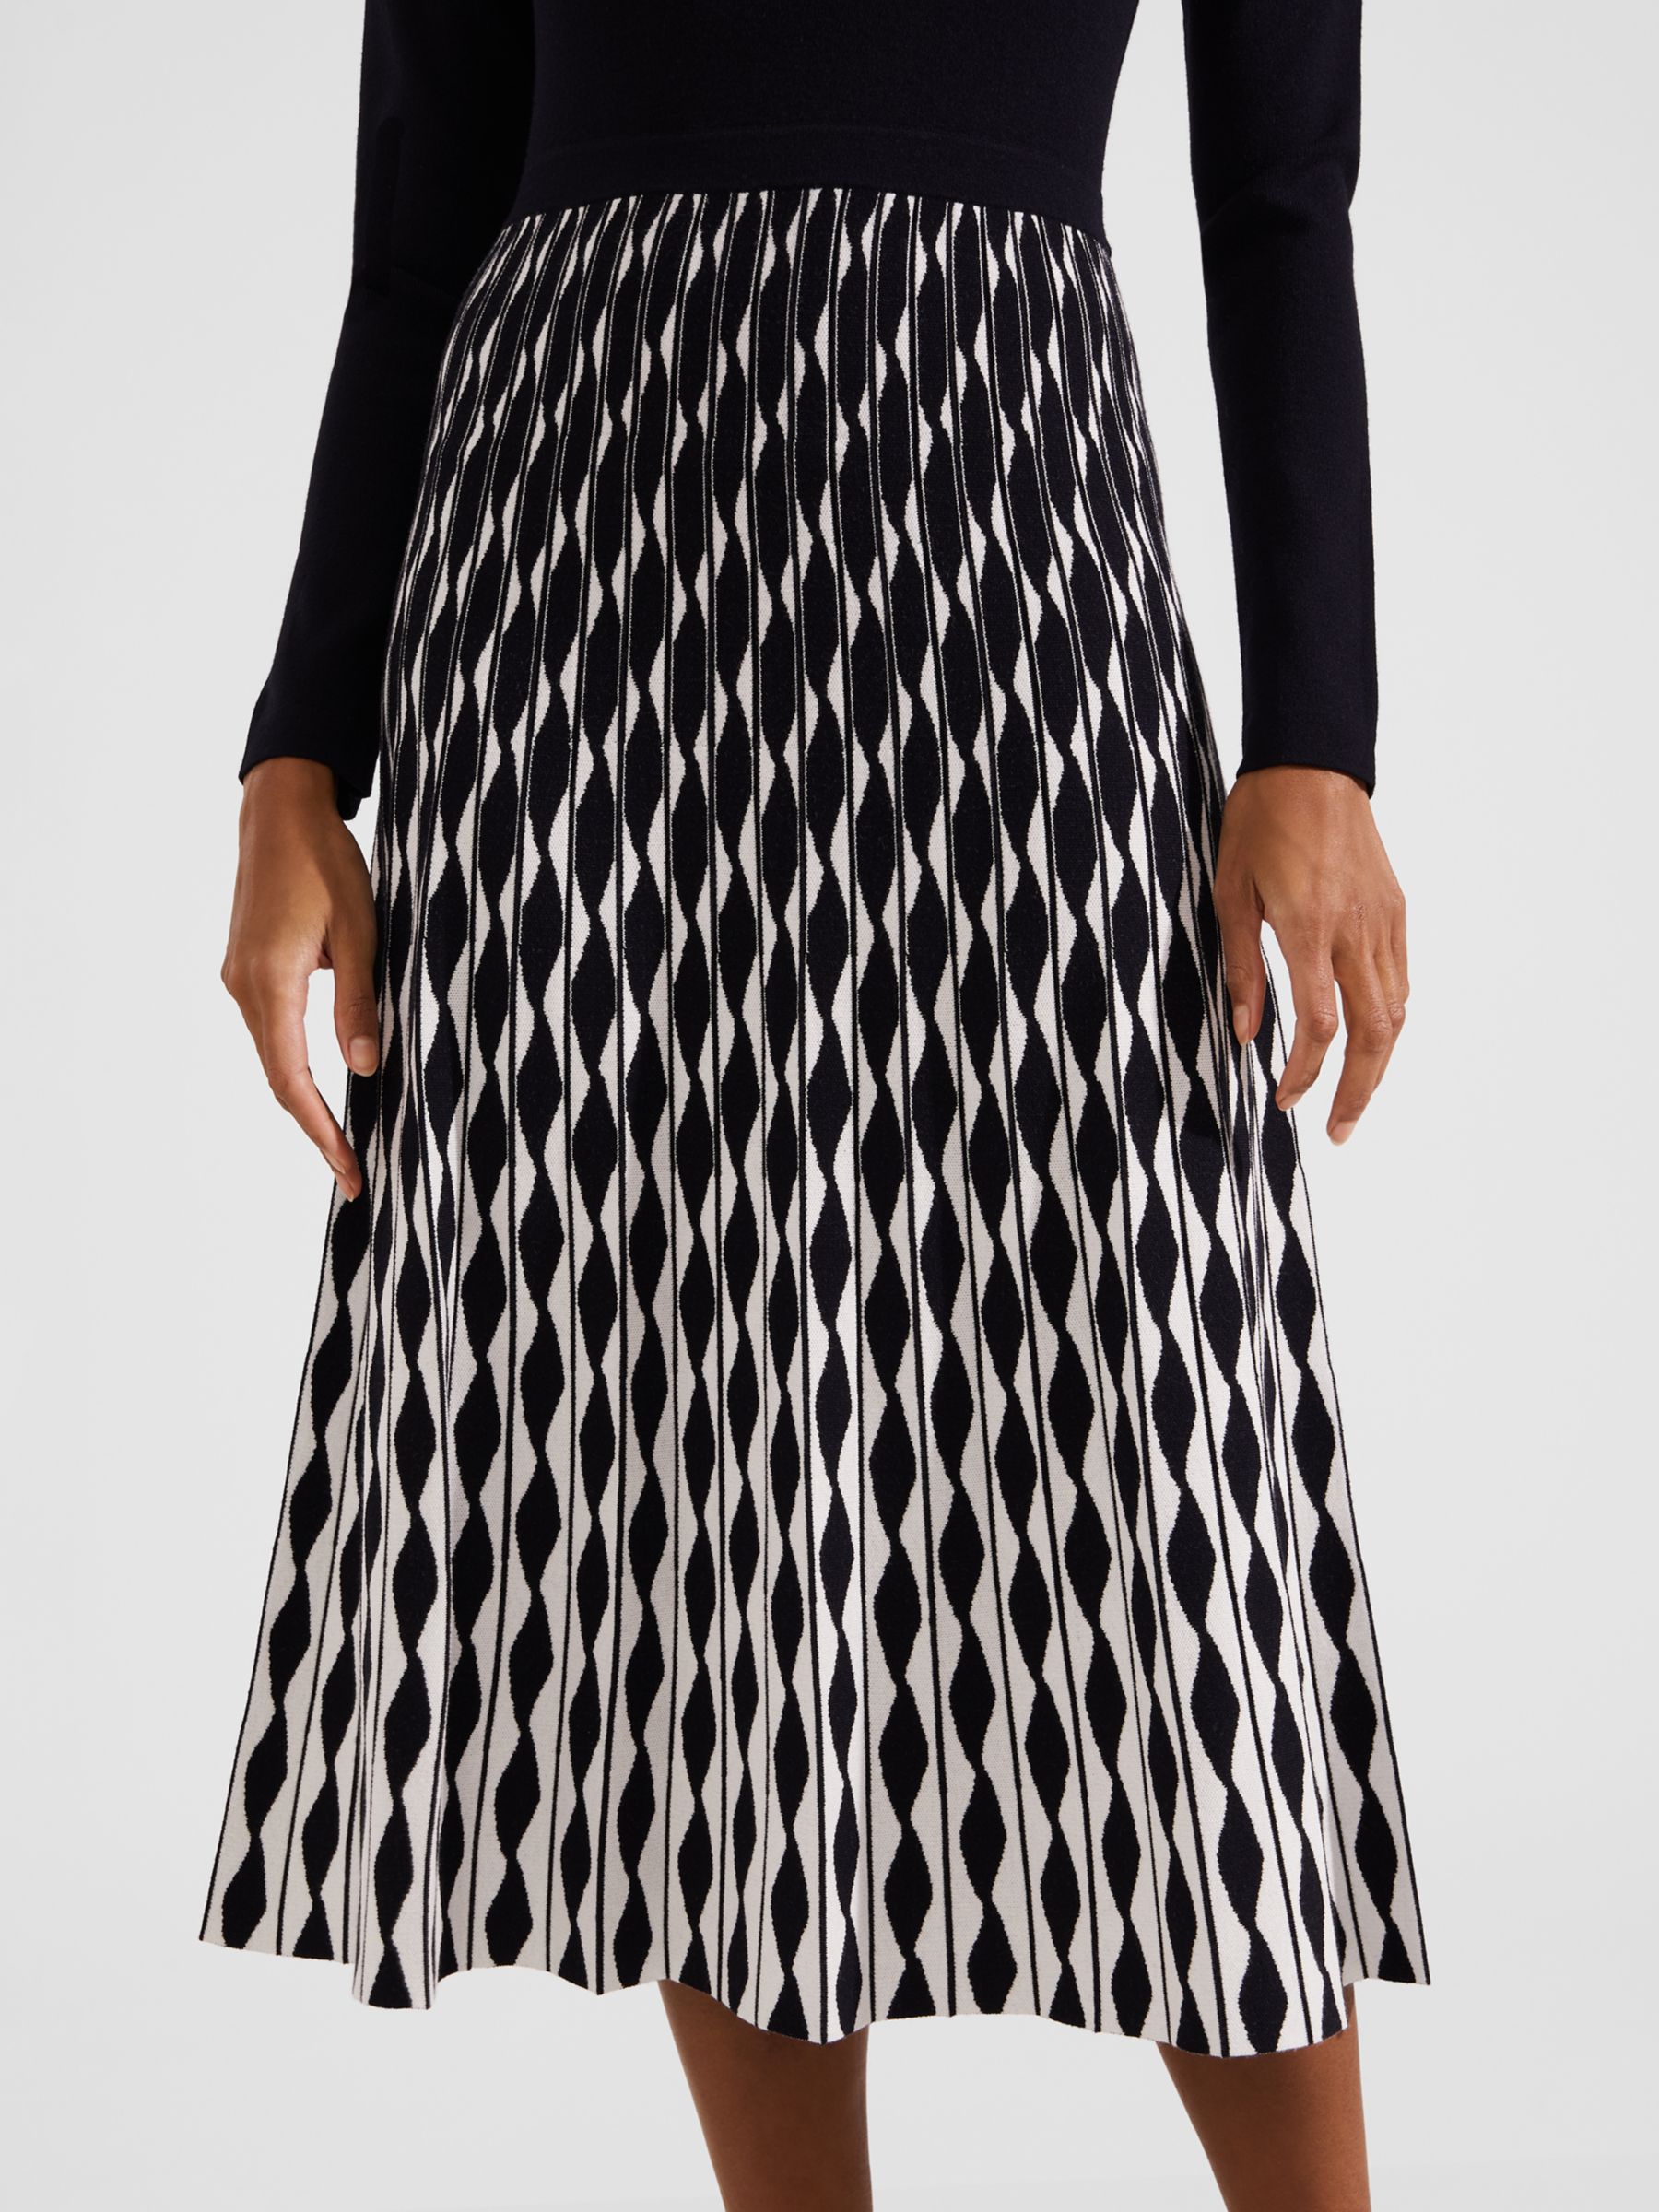 Hobbs Larna Knitted Dress, Navy/Ivory, 20